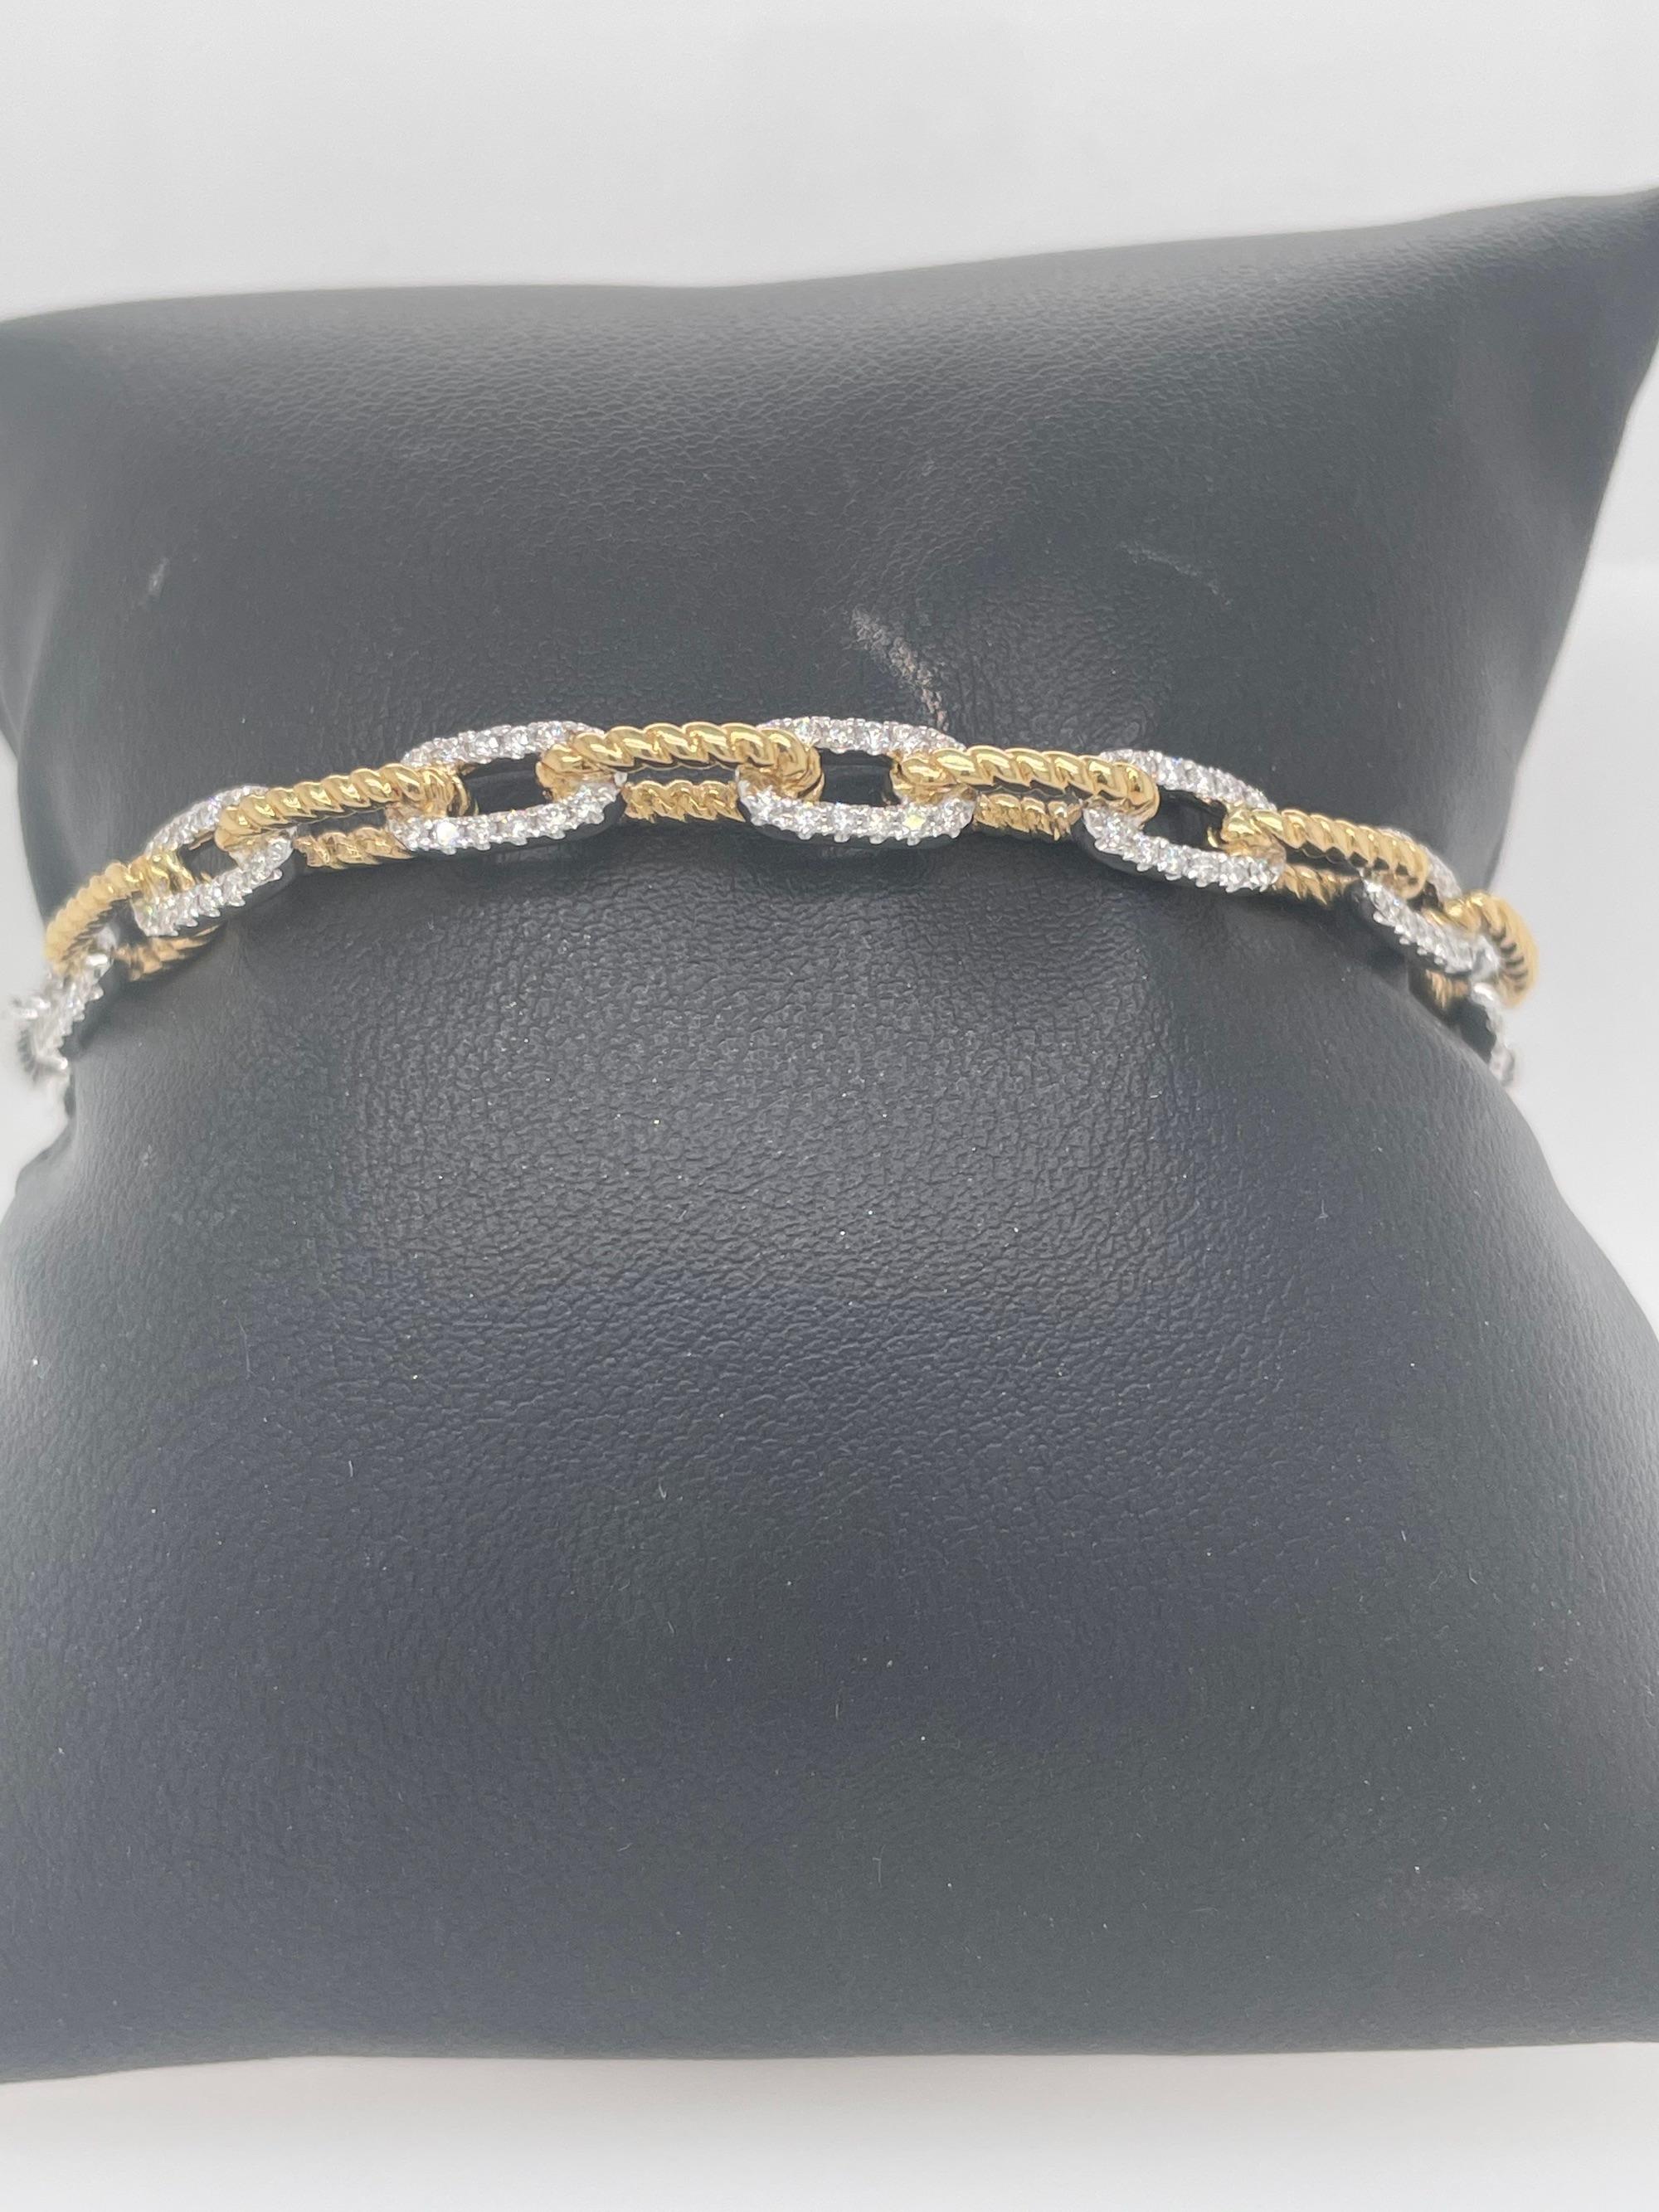 Brilliant Cut White Gold and Diamond Bangle Bracelet For Sale